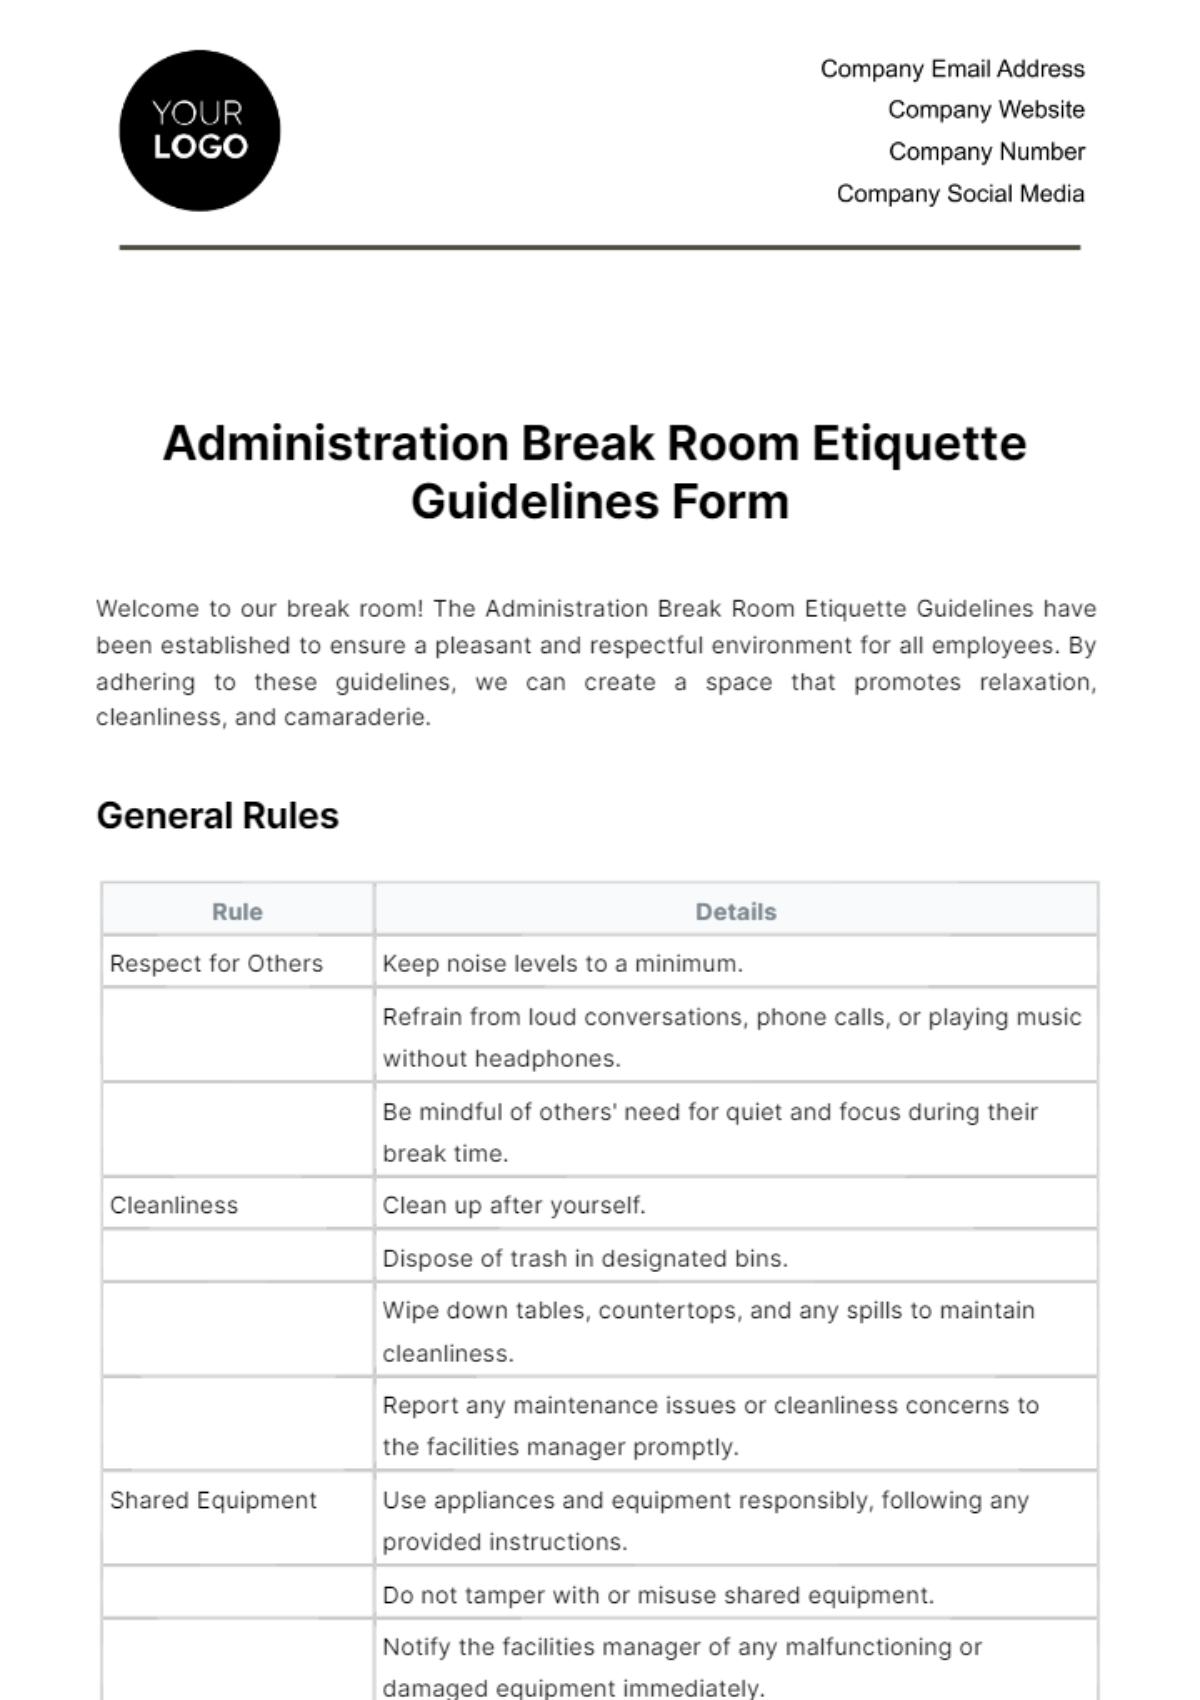 Administration Break Room Etiquette Guidelines Form Template